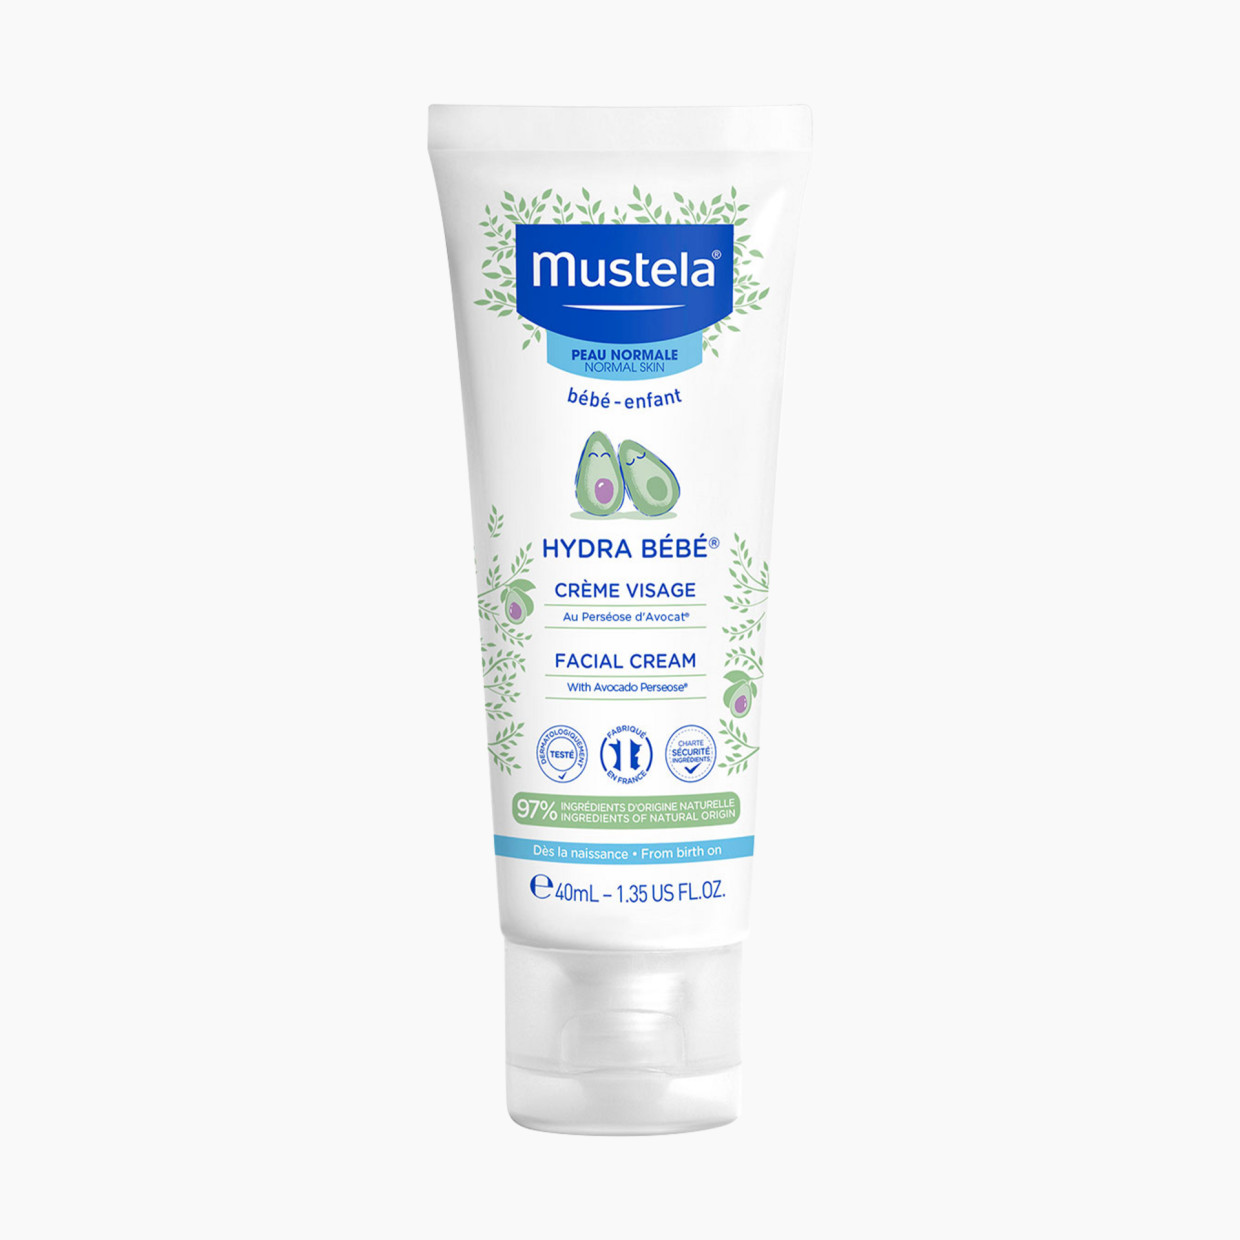 Mustela Hydra Bebe Face Cream - 1.35 Fl. Oz.